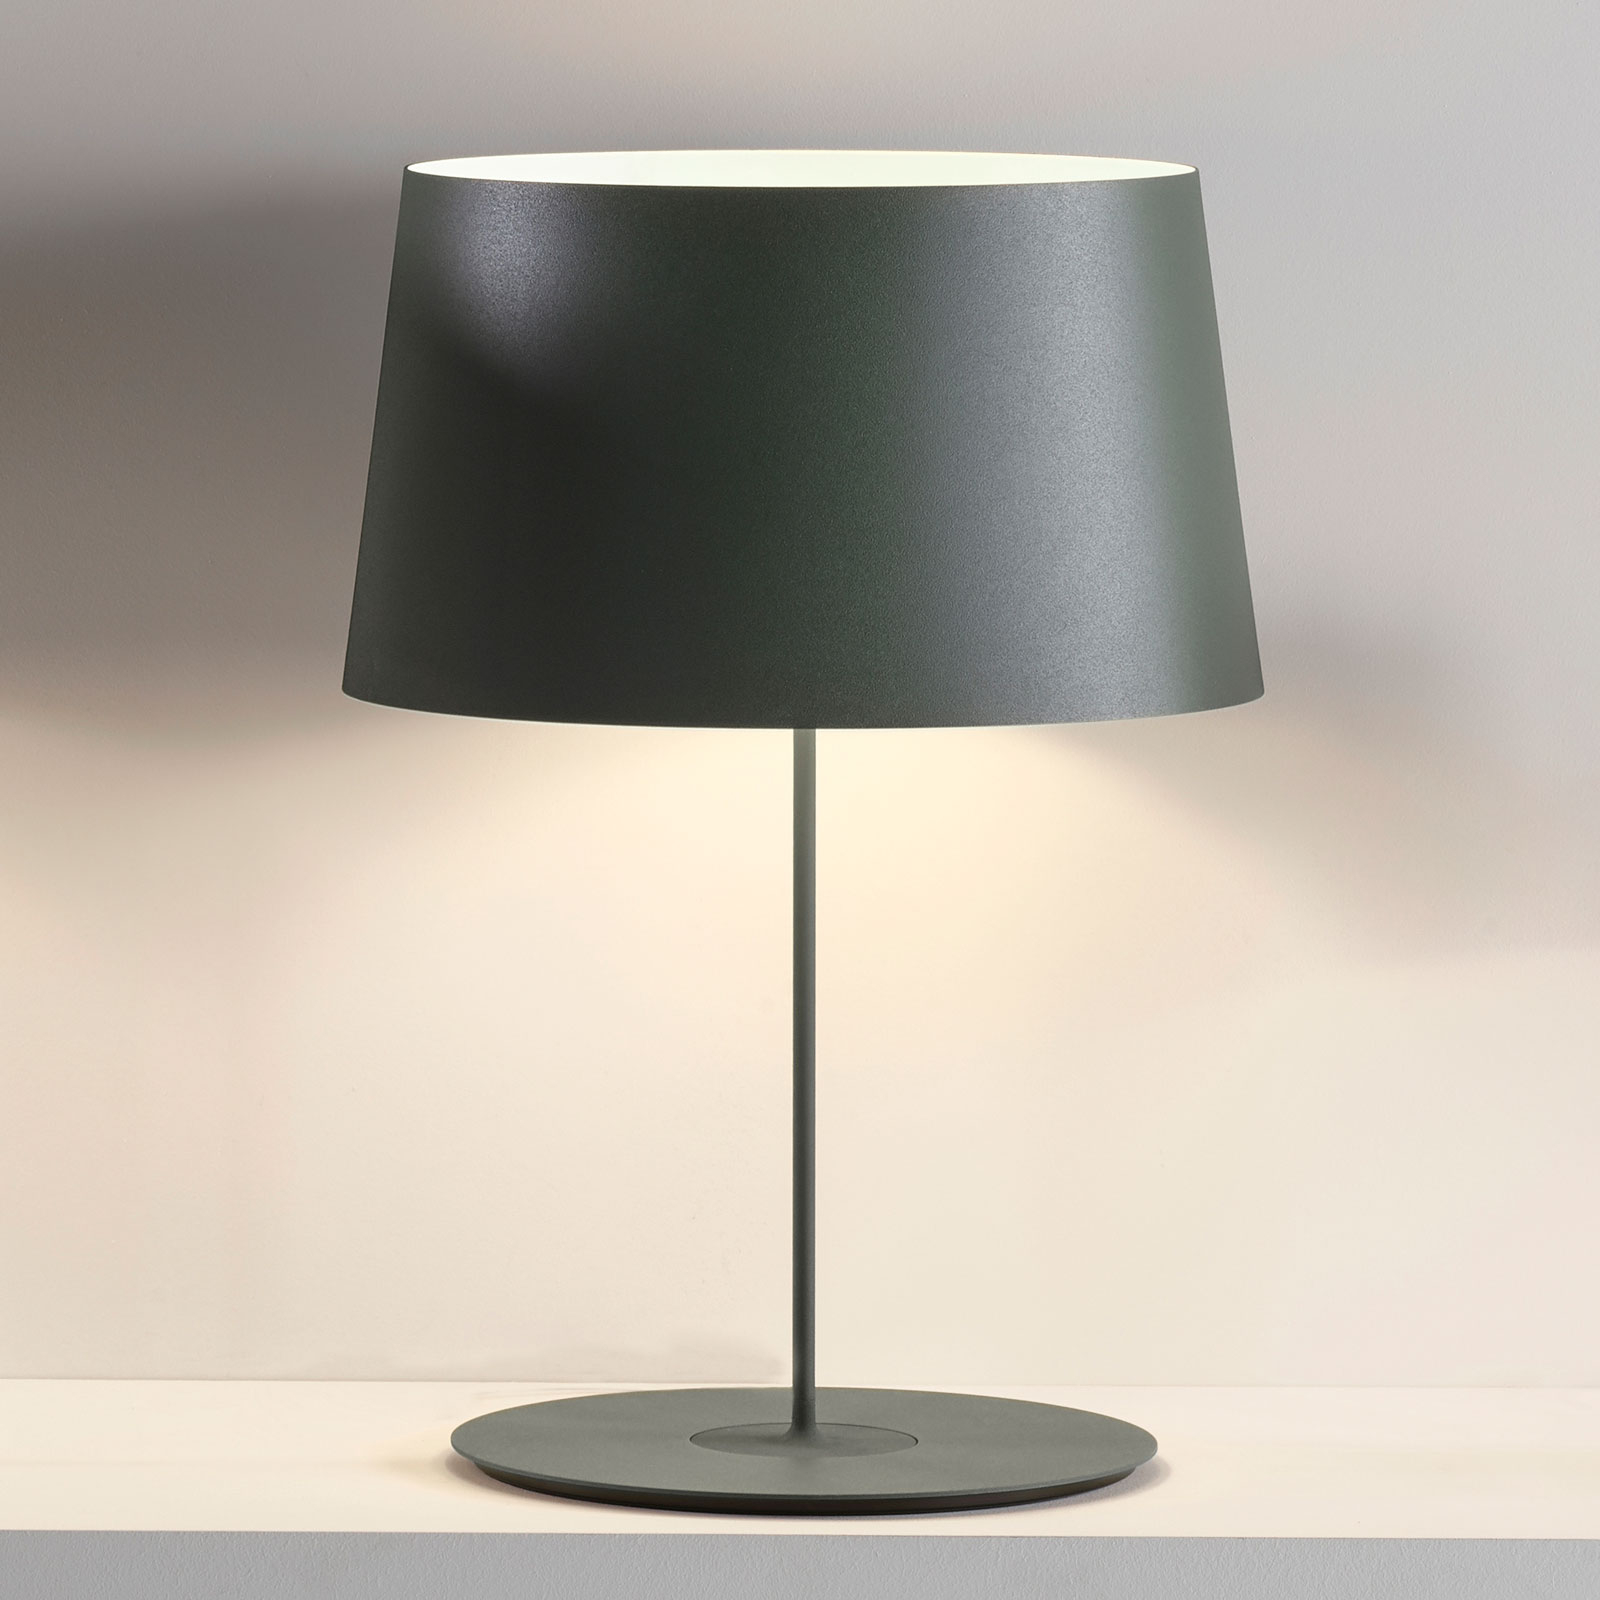 Vibia Warm 4901 tafellamp, Ø 42 cm, groen